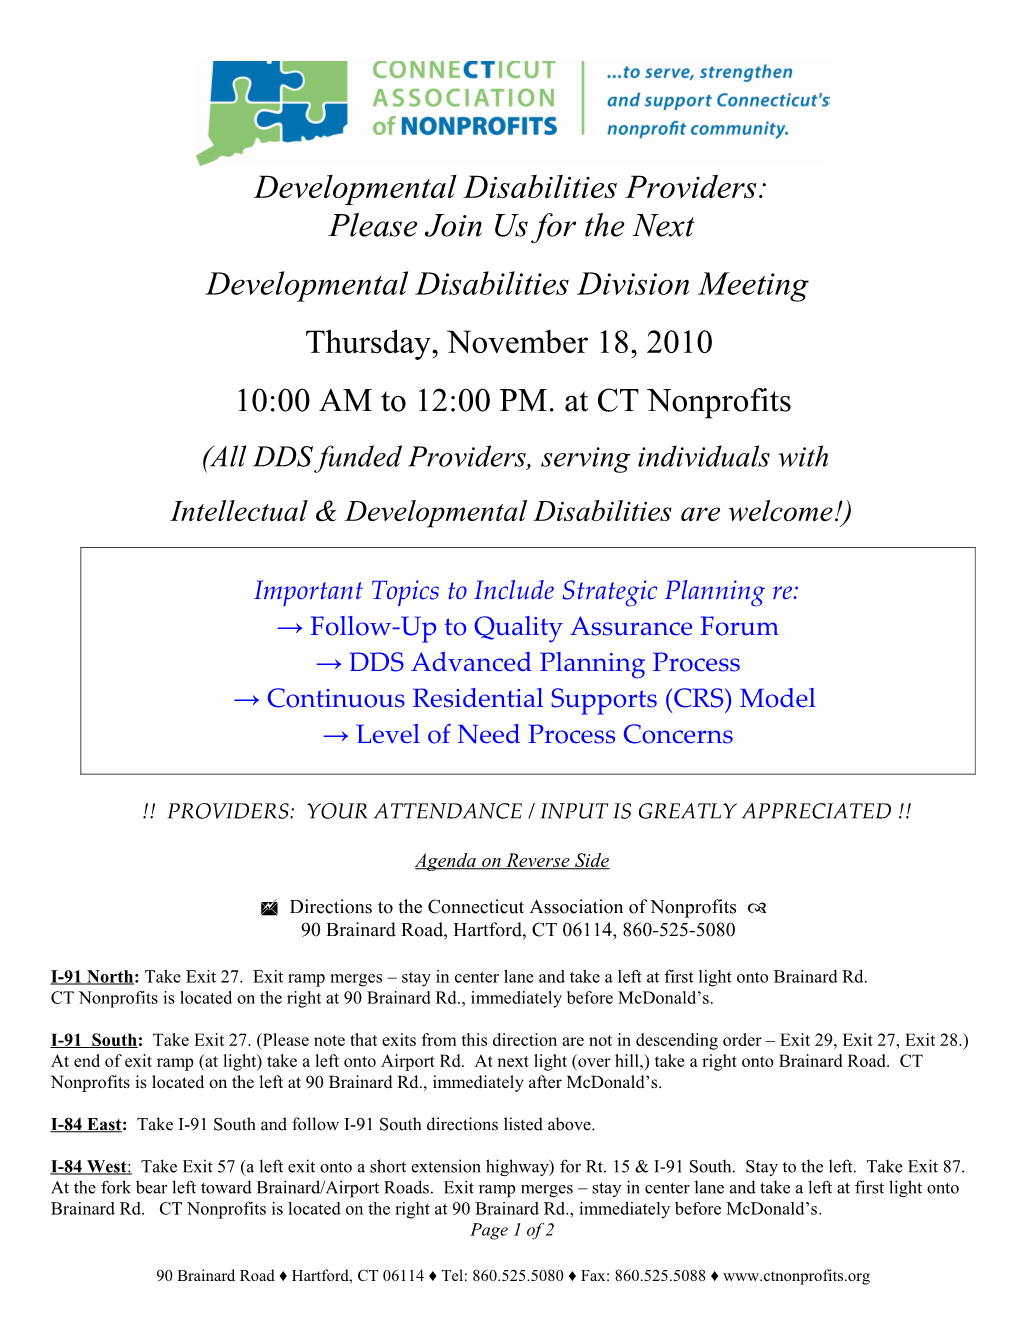 Developmental Disabilities Division Meeting